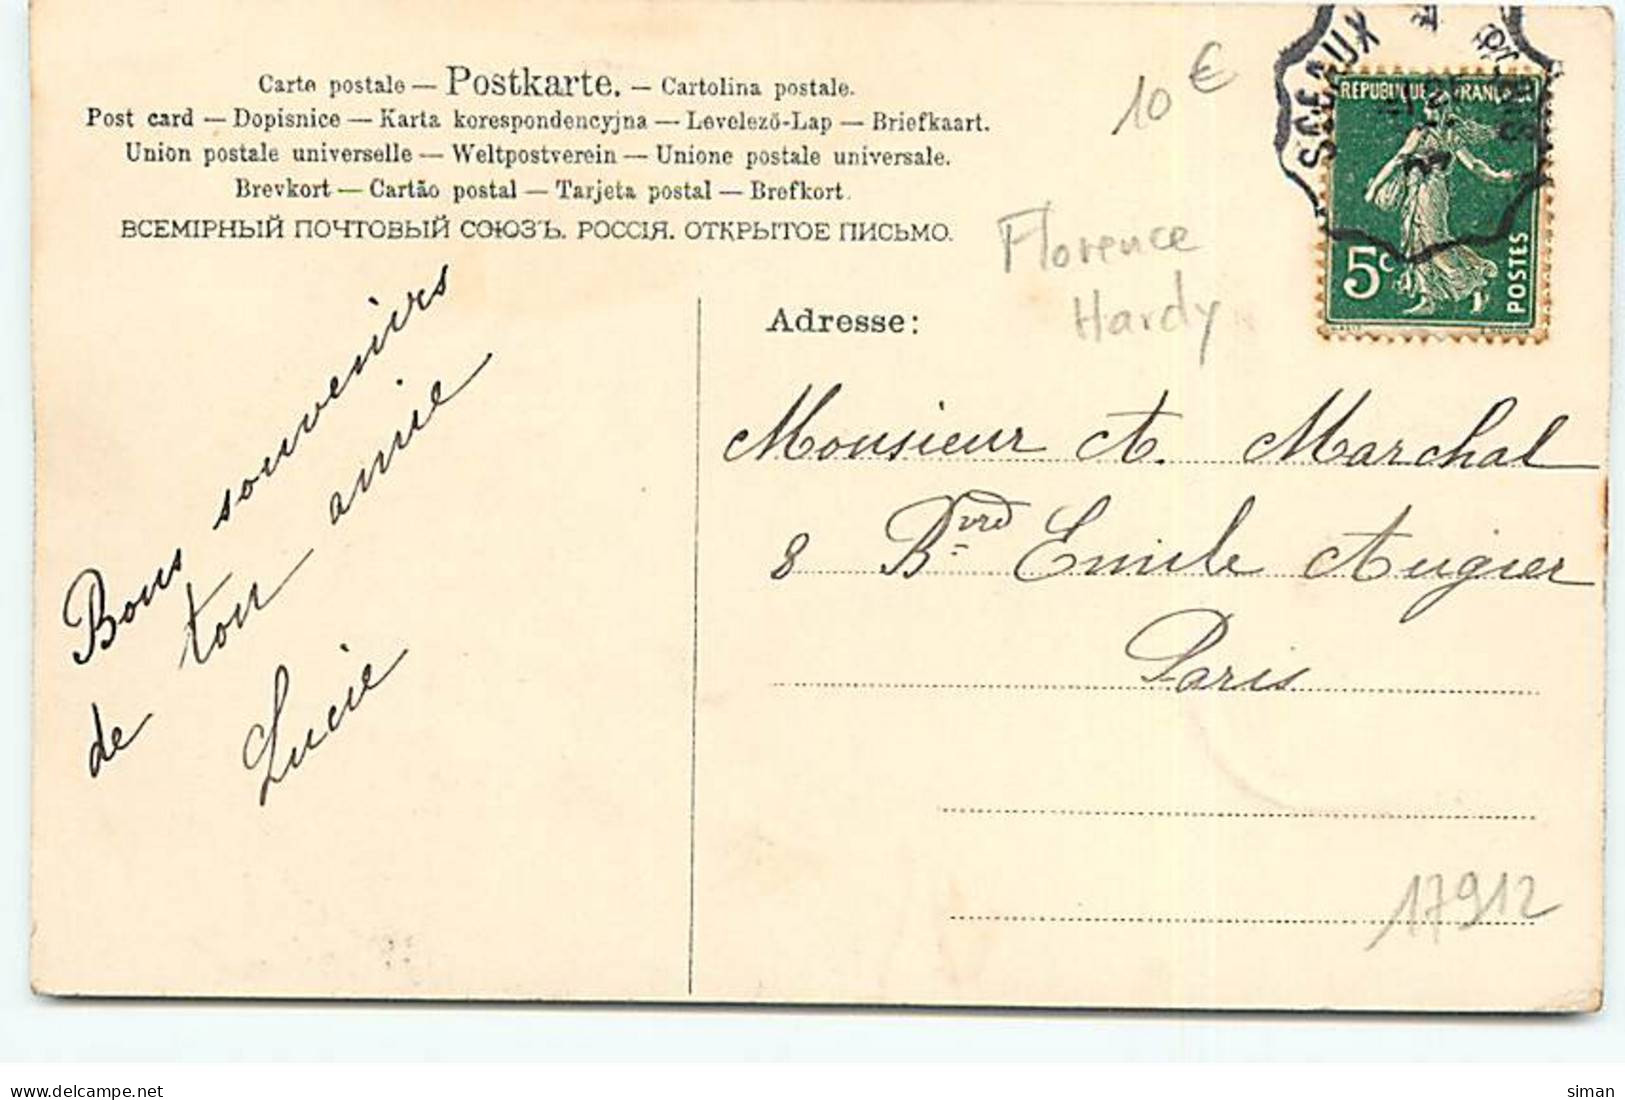 N°17912 - Florence Hardy - Enfants Avec Des Fleurs Se Promenant - Hardy, Florence